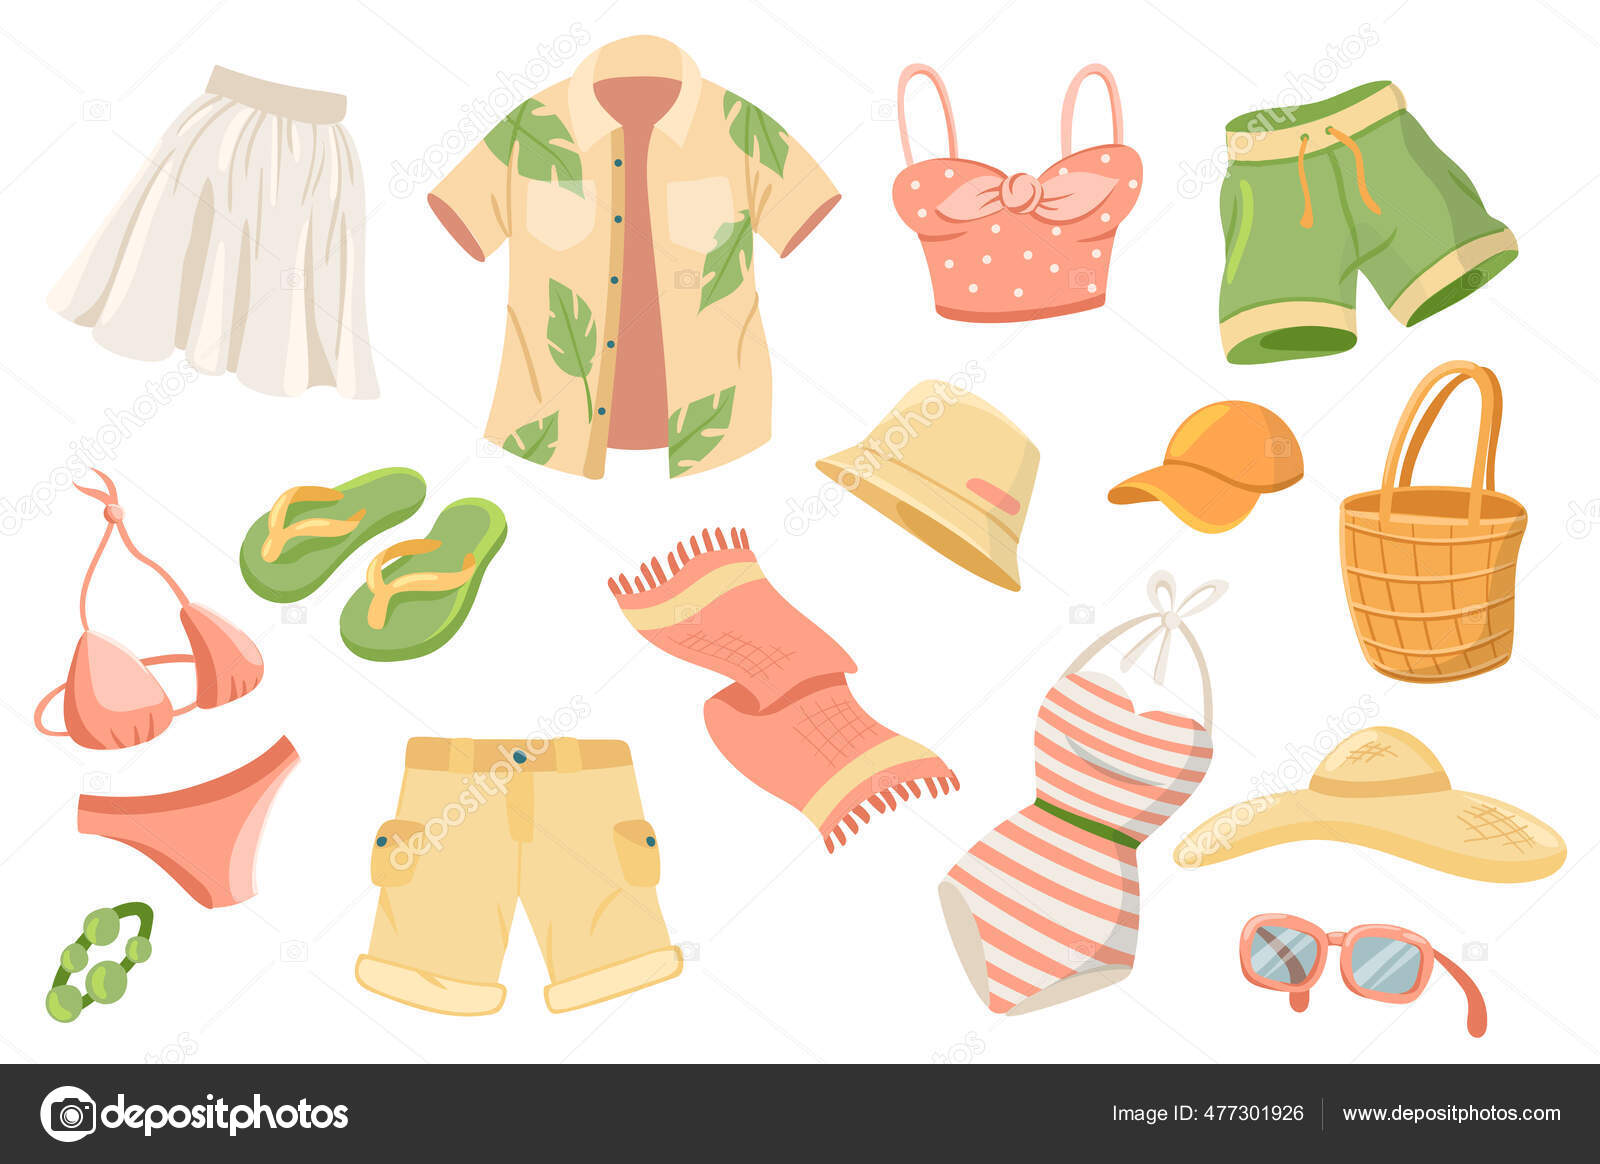 https://st2.depositphotos.com/2466369/47730/v/1600/depositphotos_477301926-stock-illustration-summer-clothing-cute-stickers-isolated.jpg